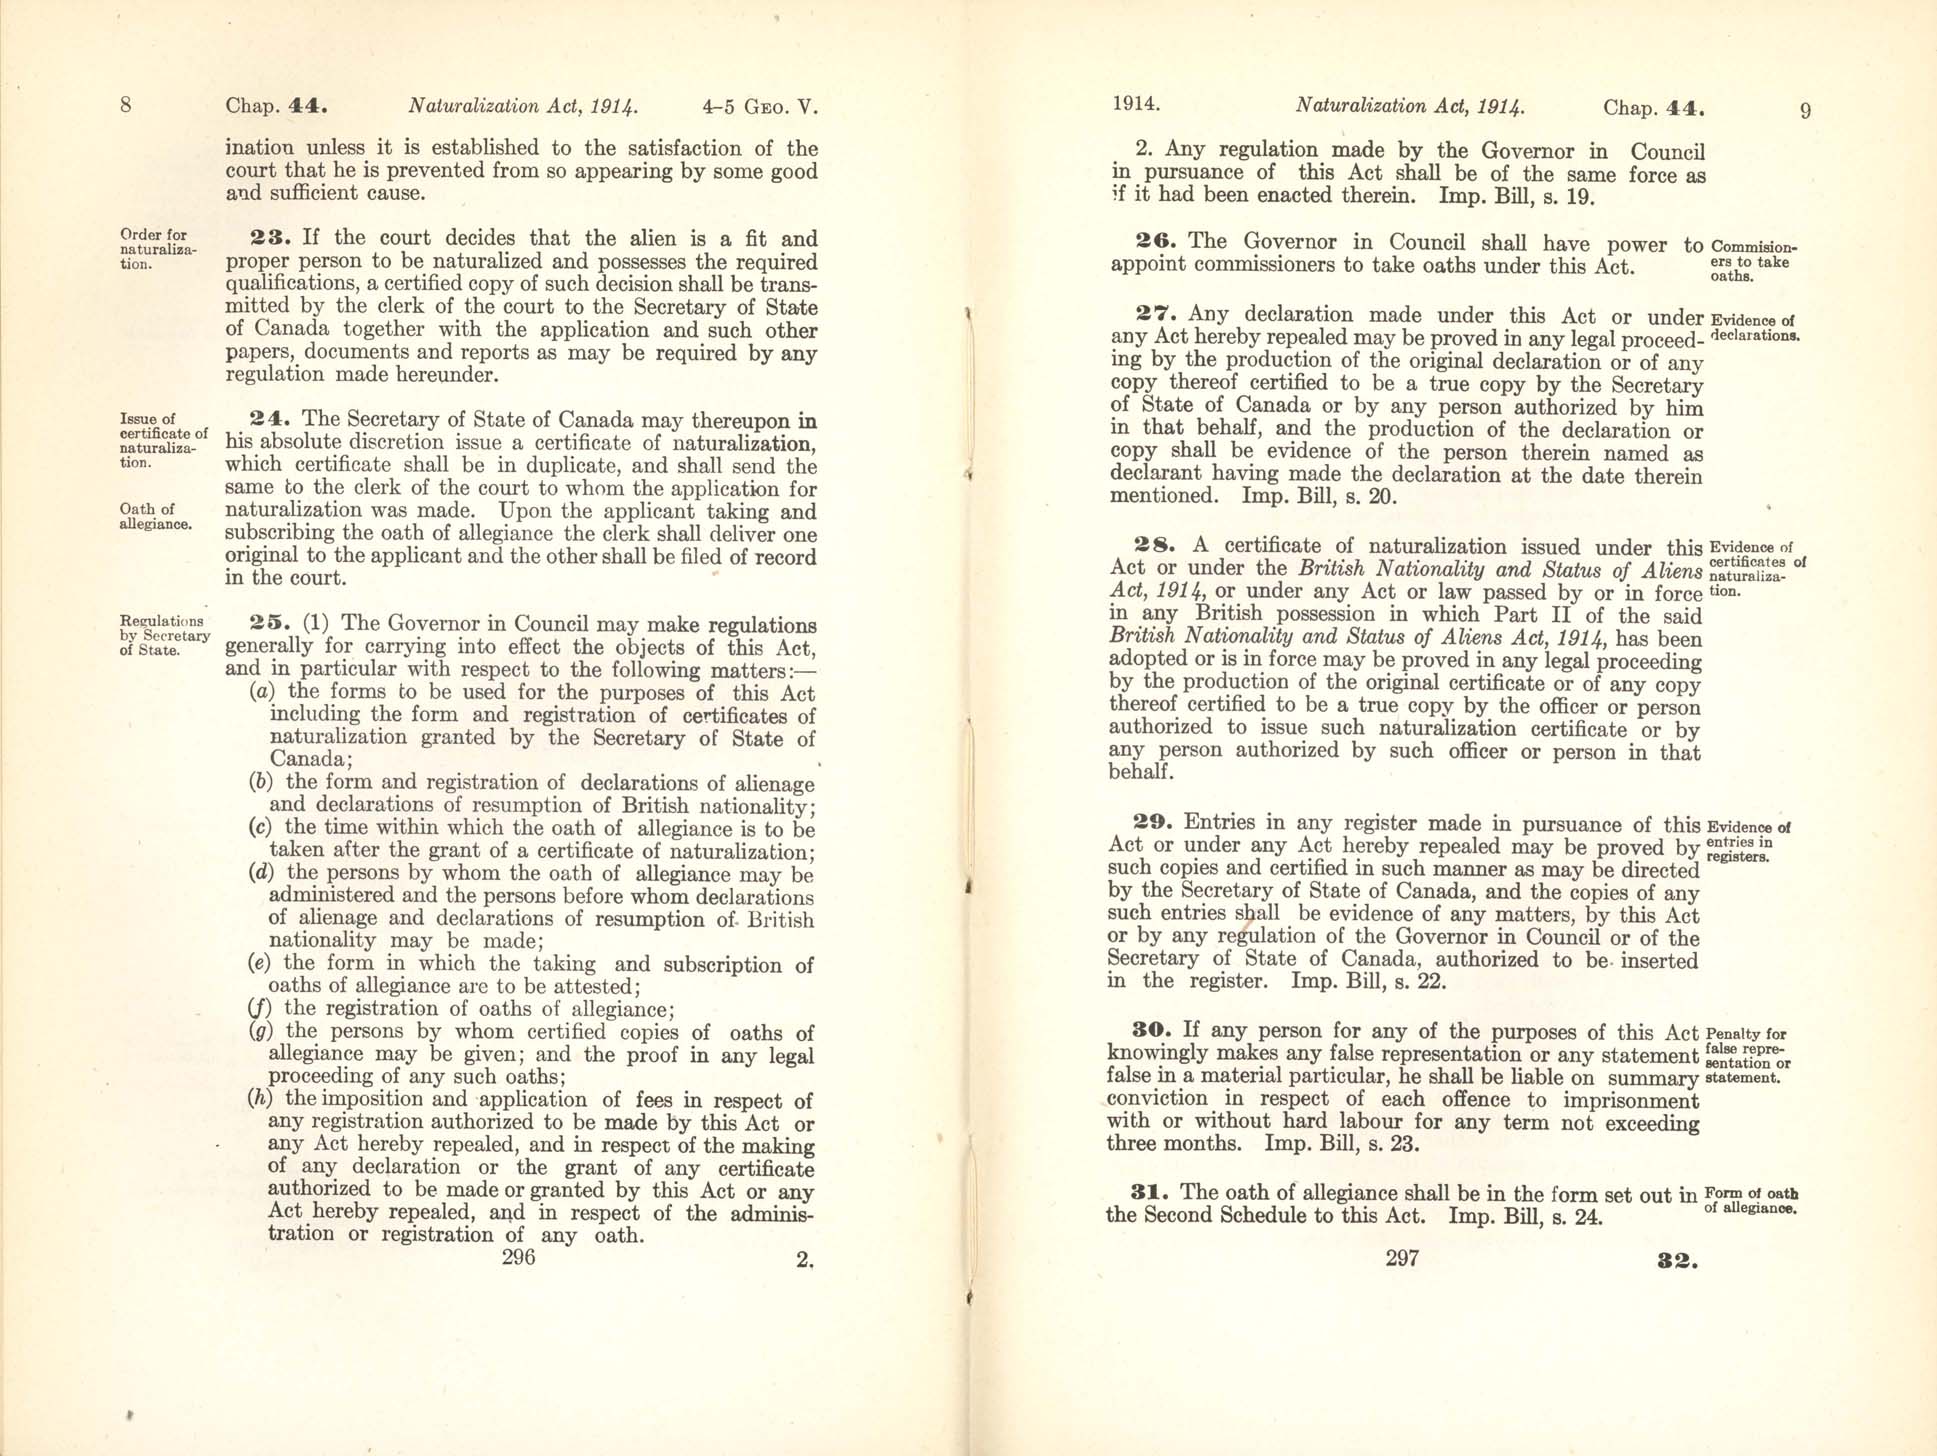 Page 296, 297 Naturalization Act, 1914